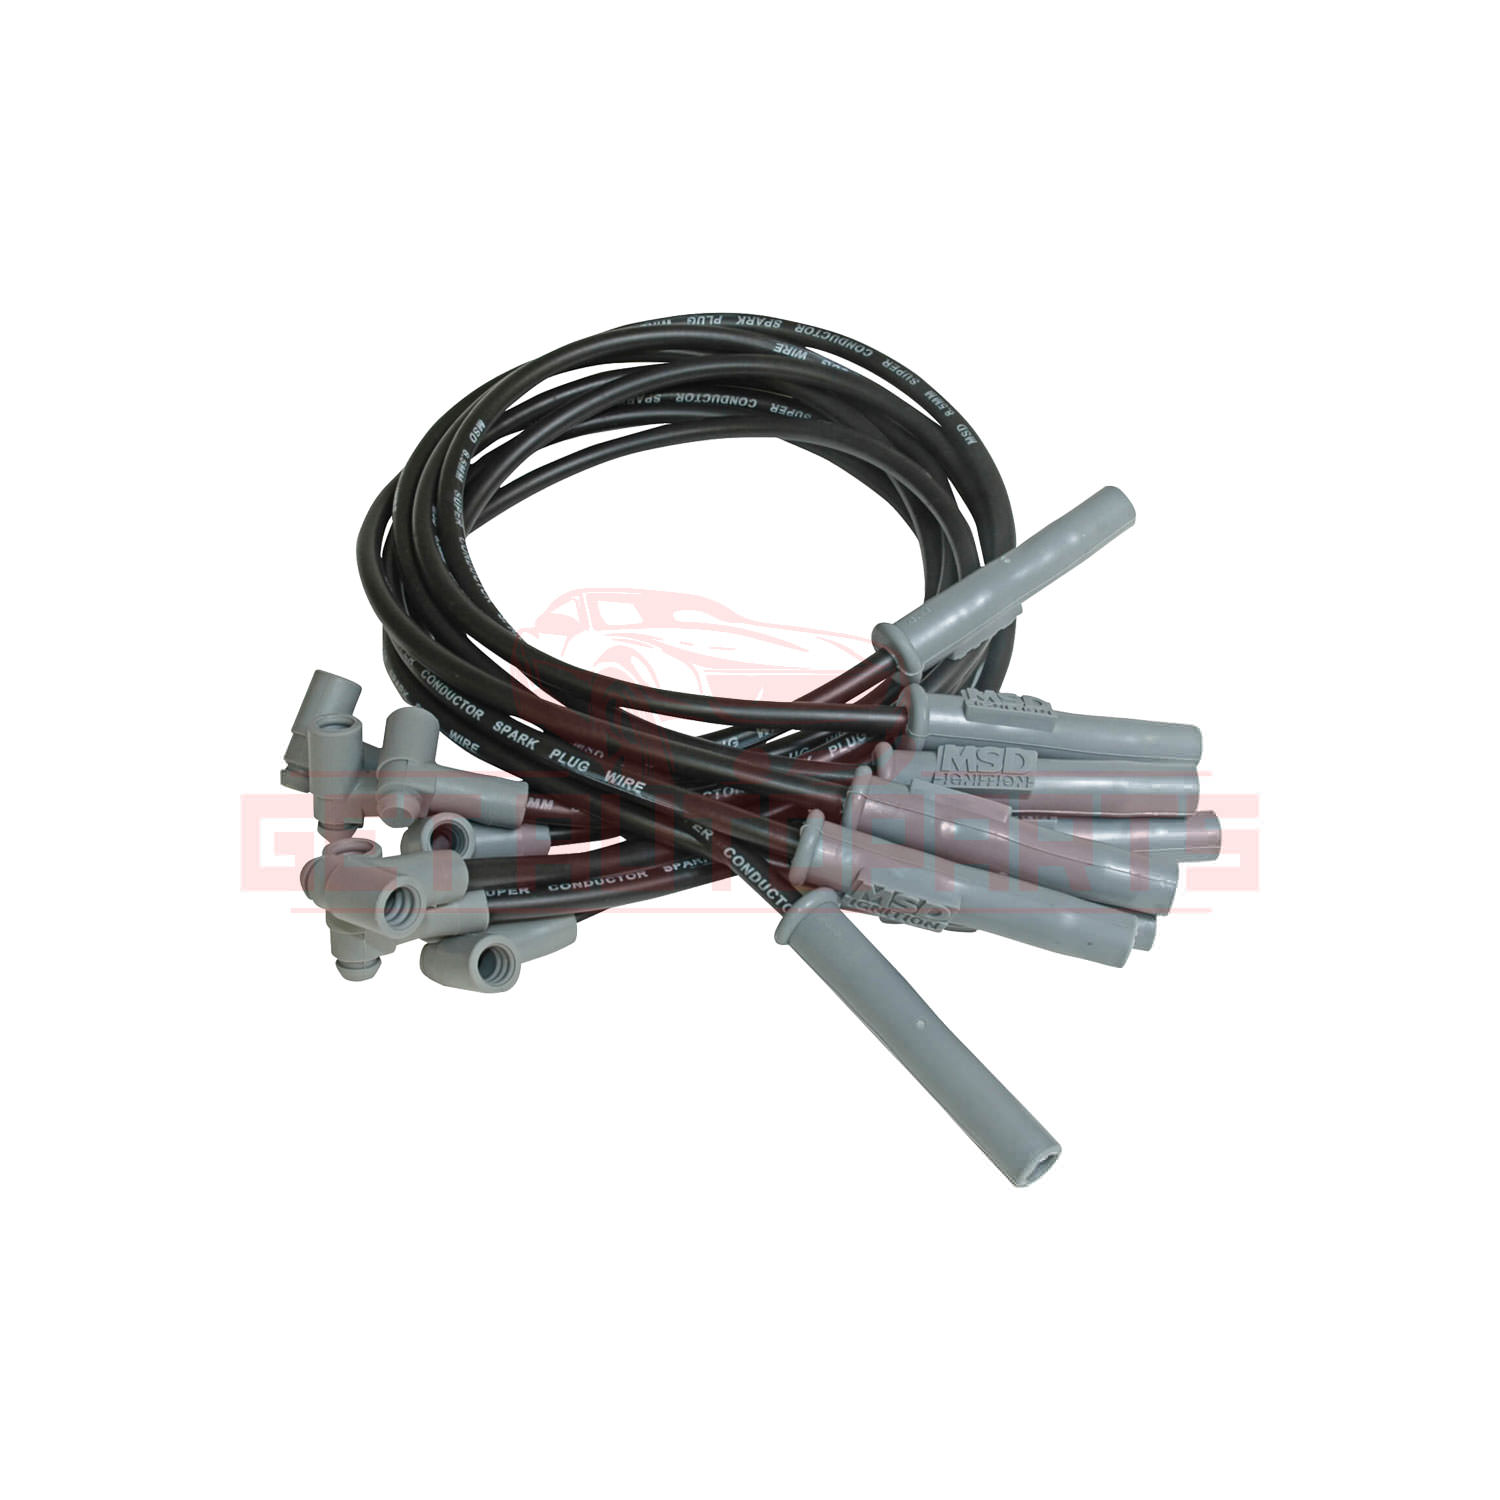 MSD Spark Plug Wire Set fits Chevrolet C20 Pickup 74